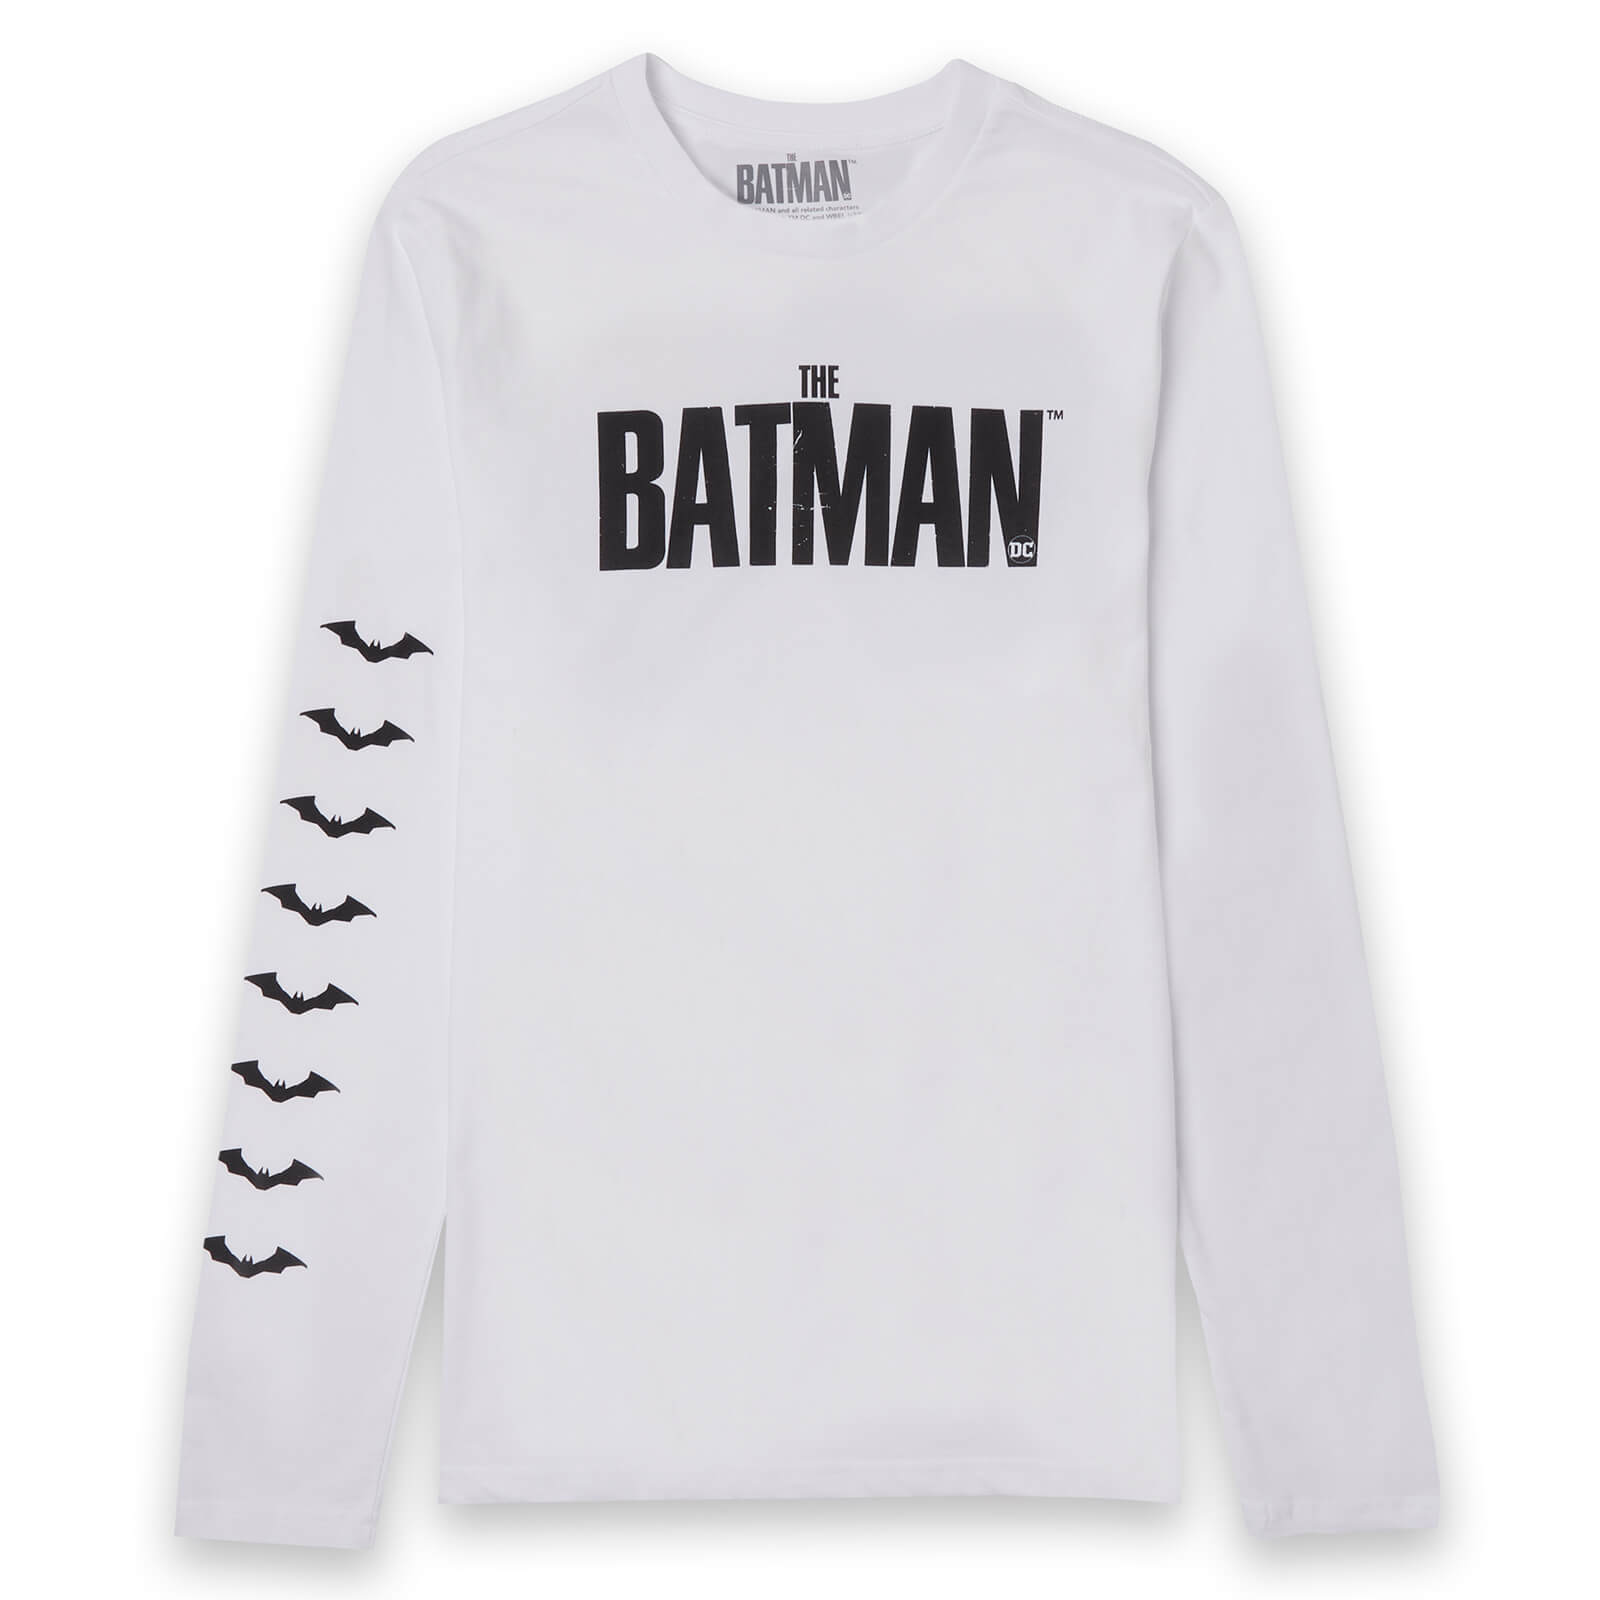 The Batman The Bat Men's Long Sleeve T-Shirt - White - X